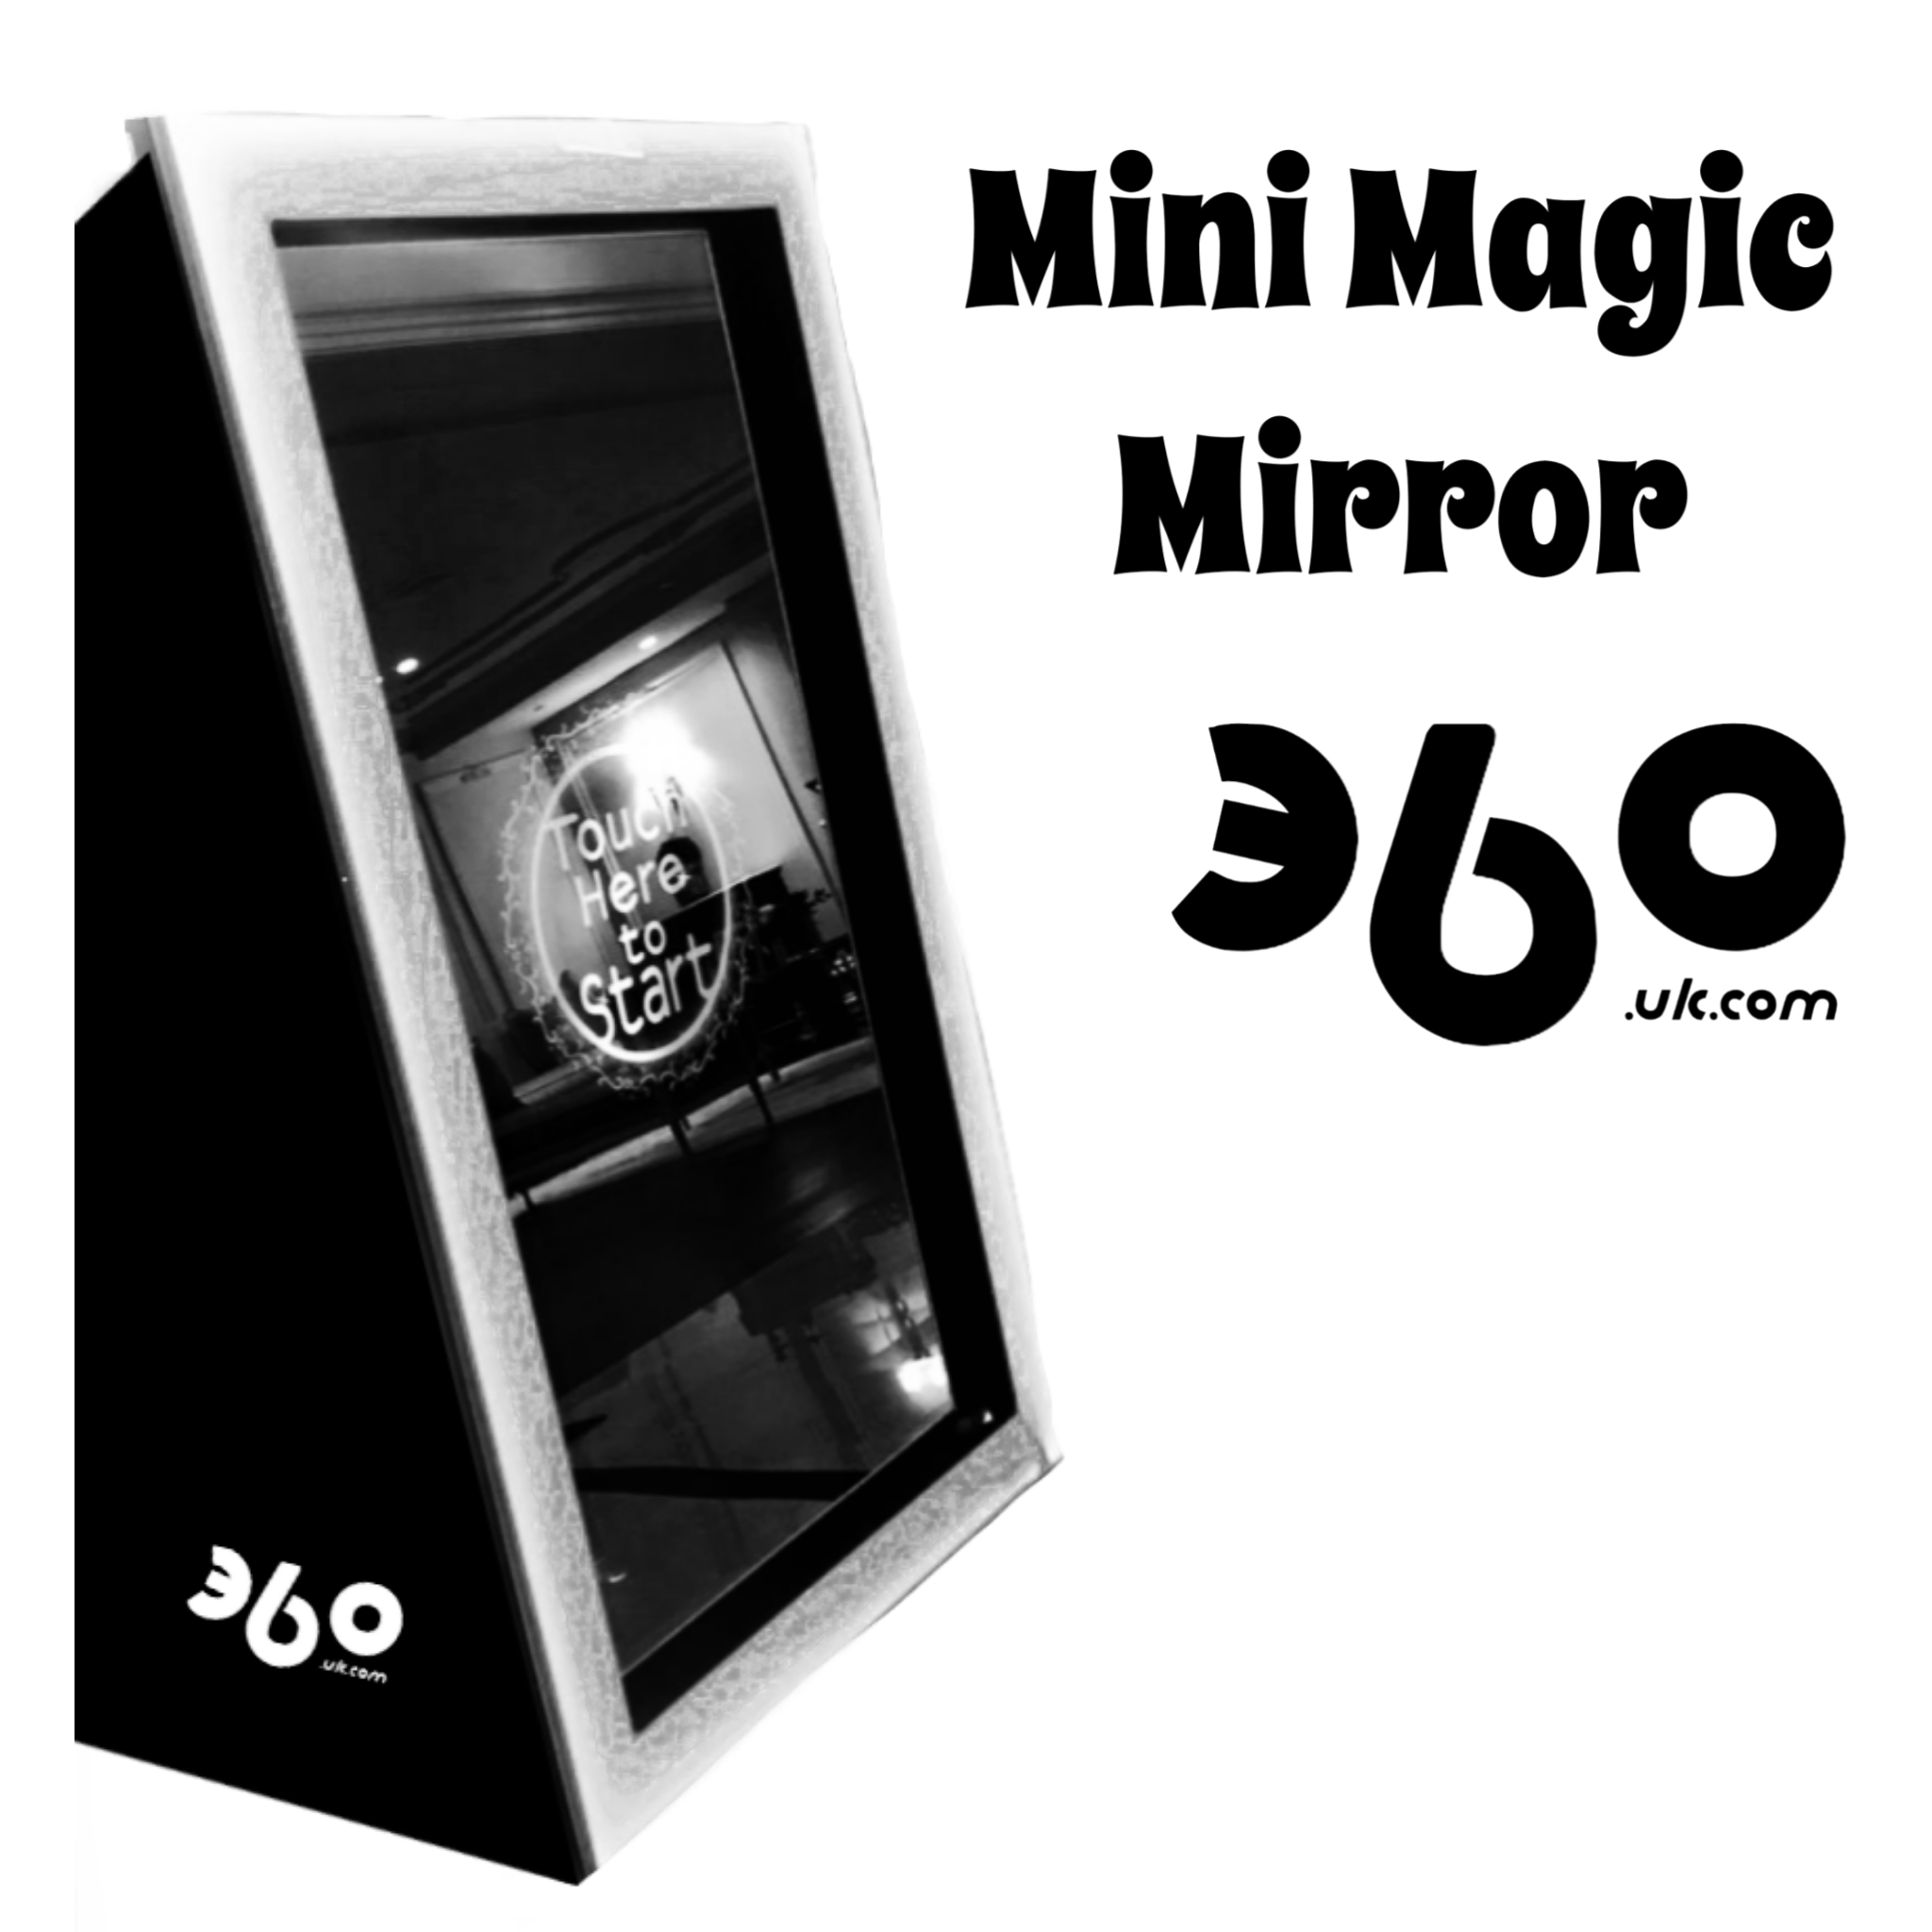 Mini Magic Mirror